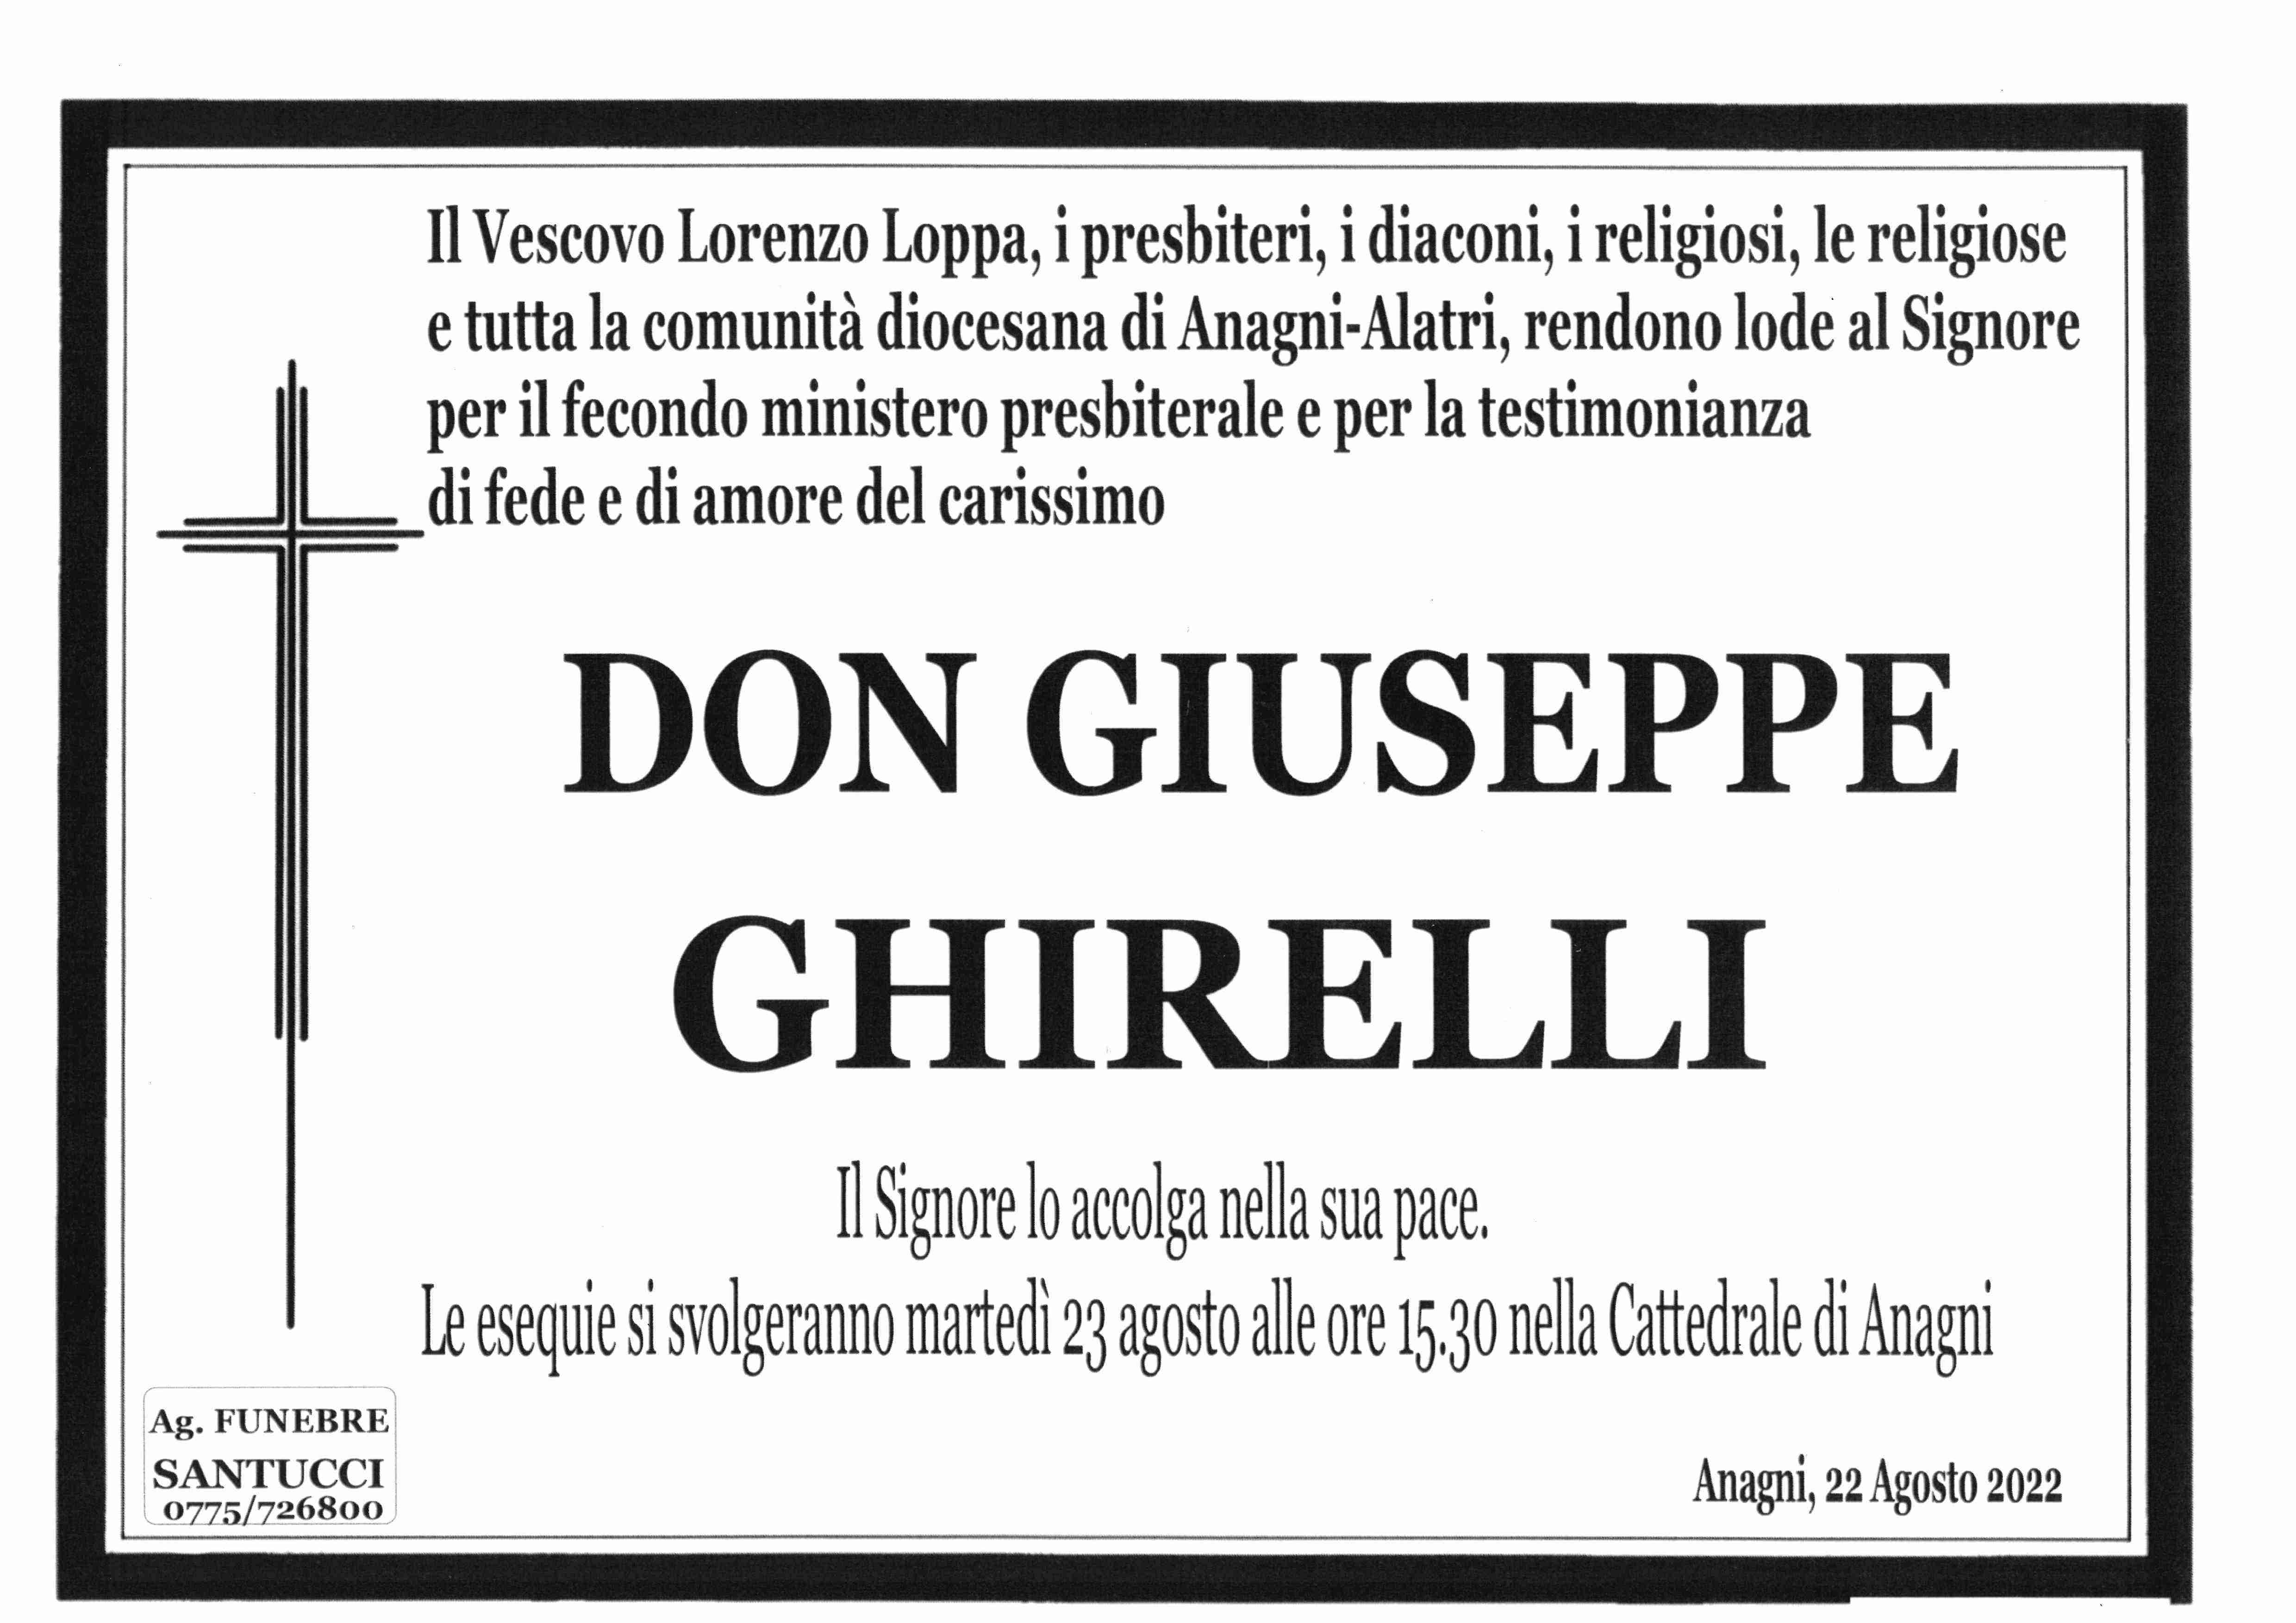 Don Giuseppe Ghirelli